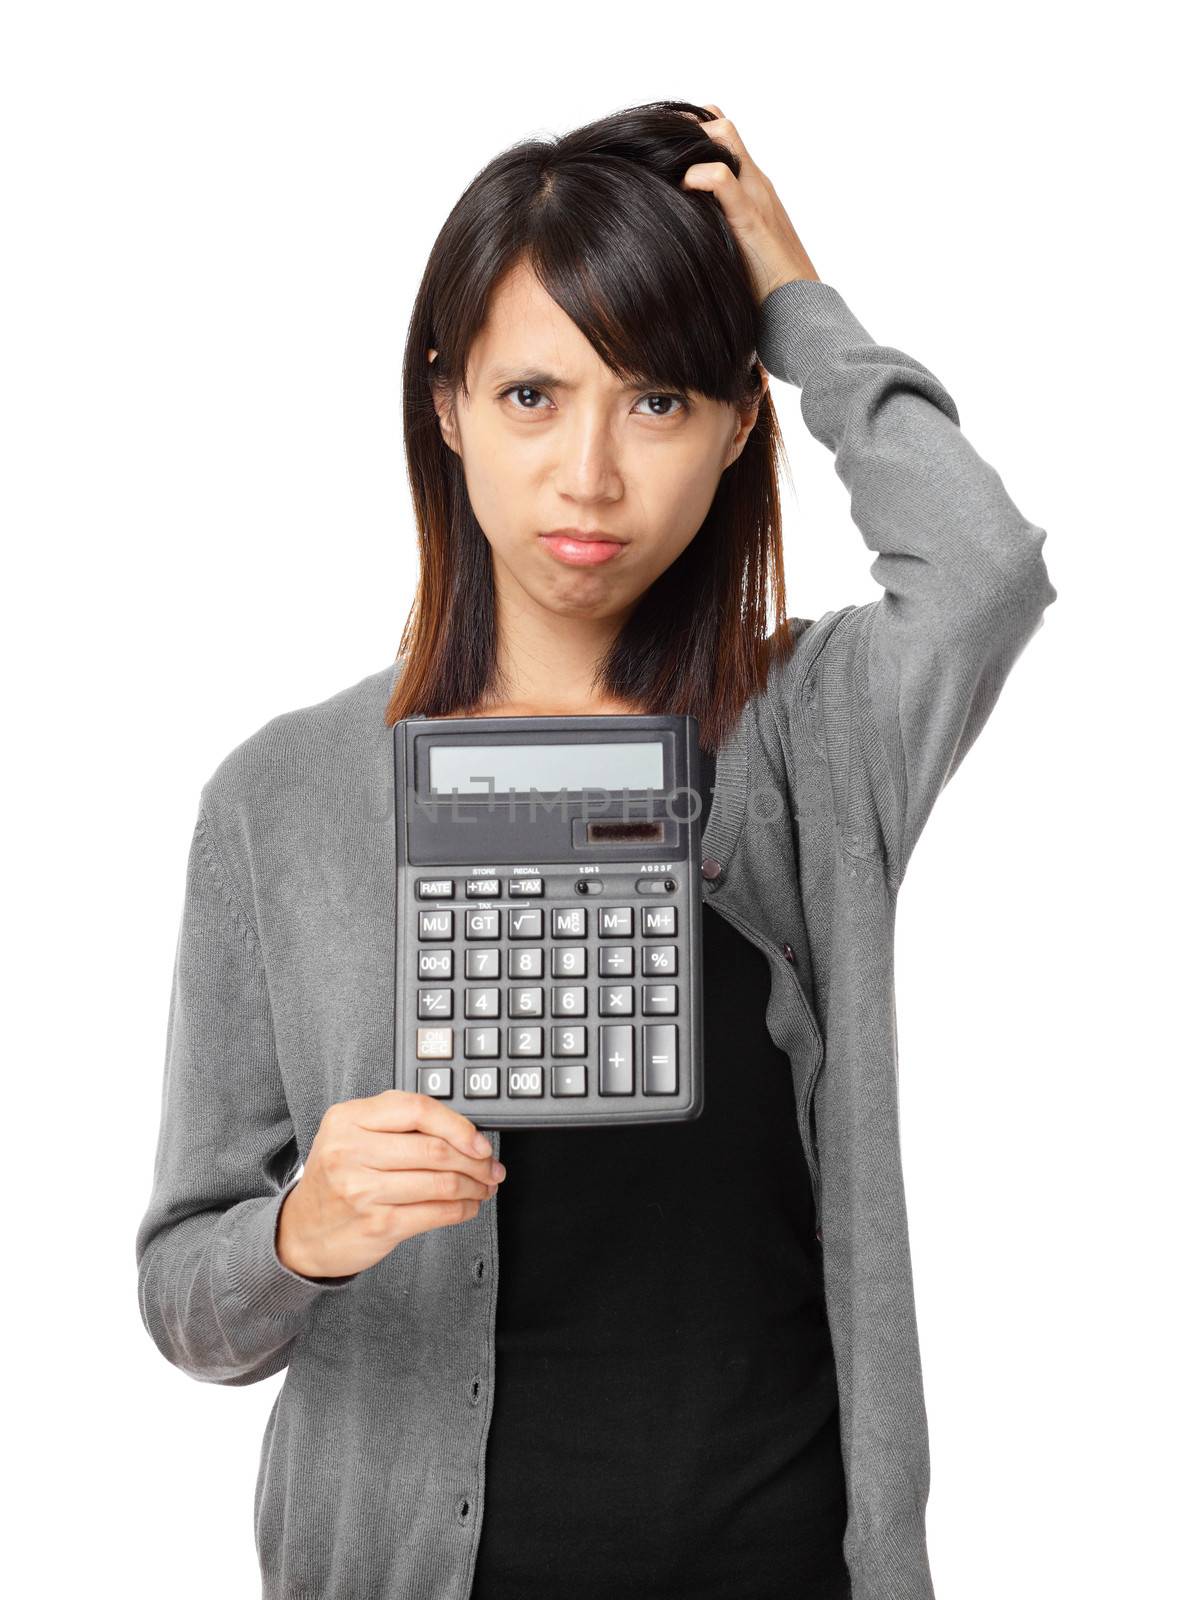 Asian woman holding calculator by leungchopan